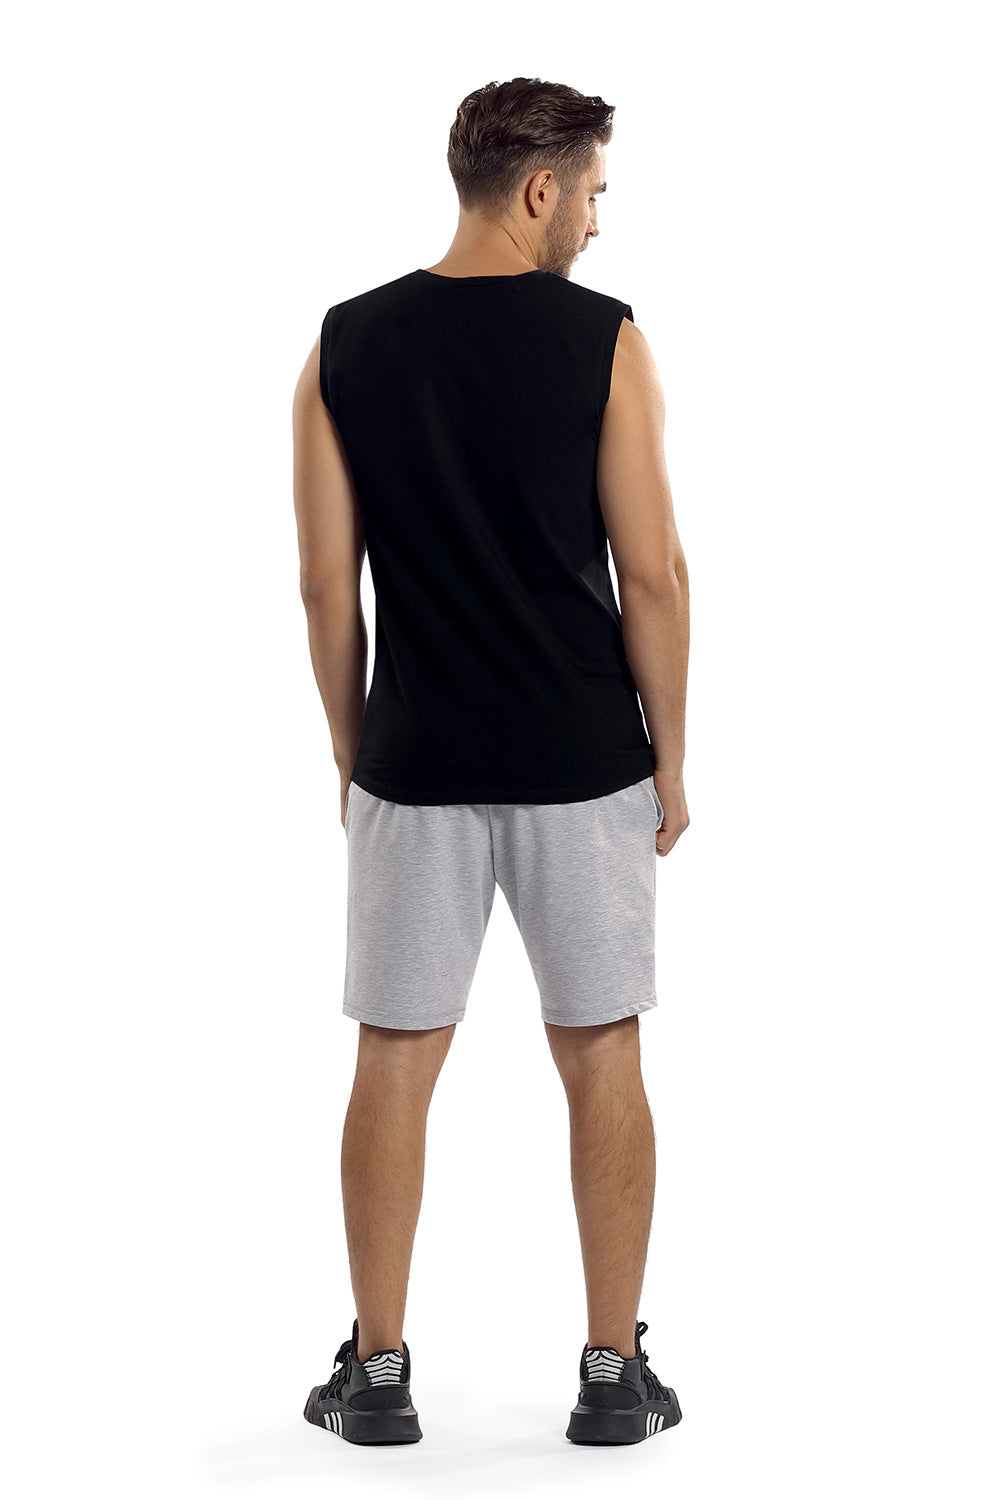 T-shirt model 180299 Elsy Style Men`s Shirts, Polo Shirts & T-Shirts for Men